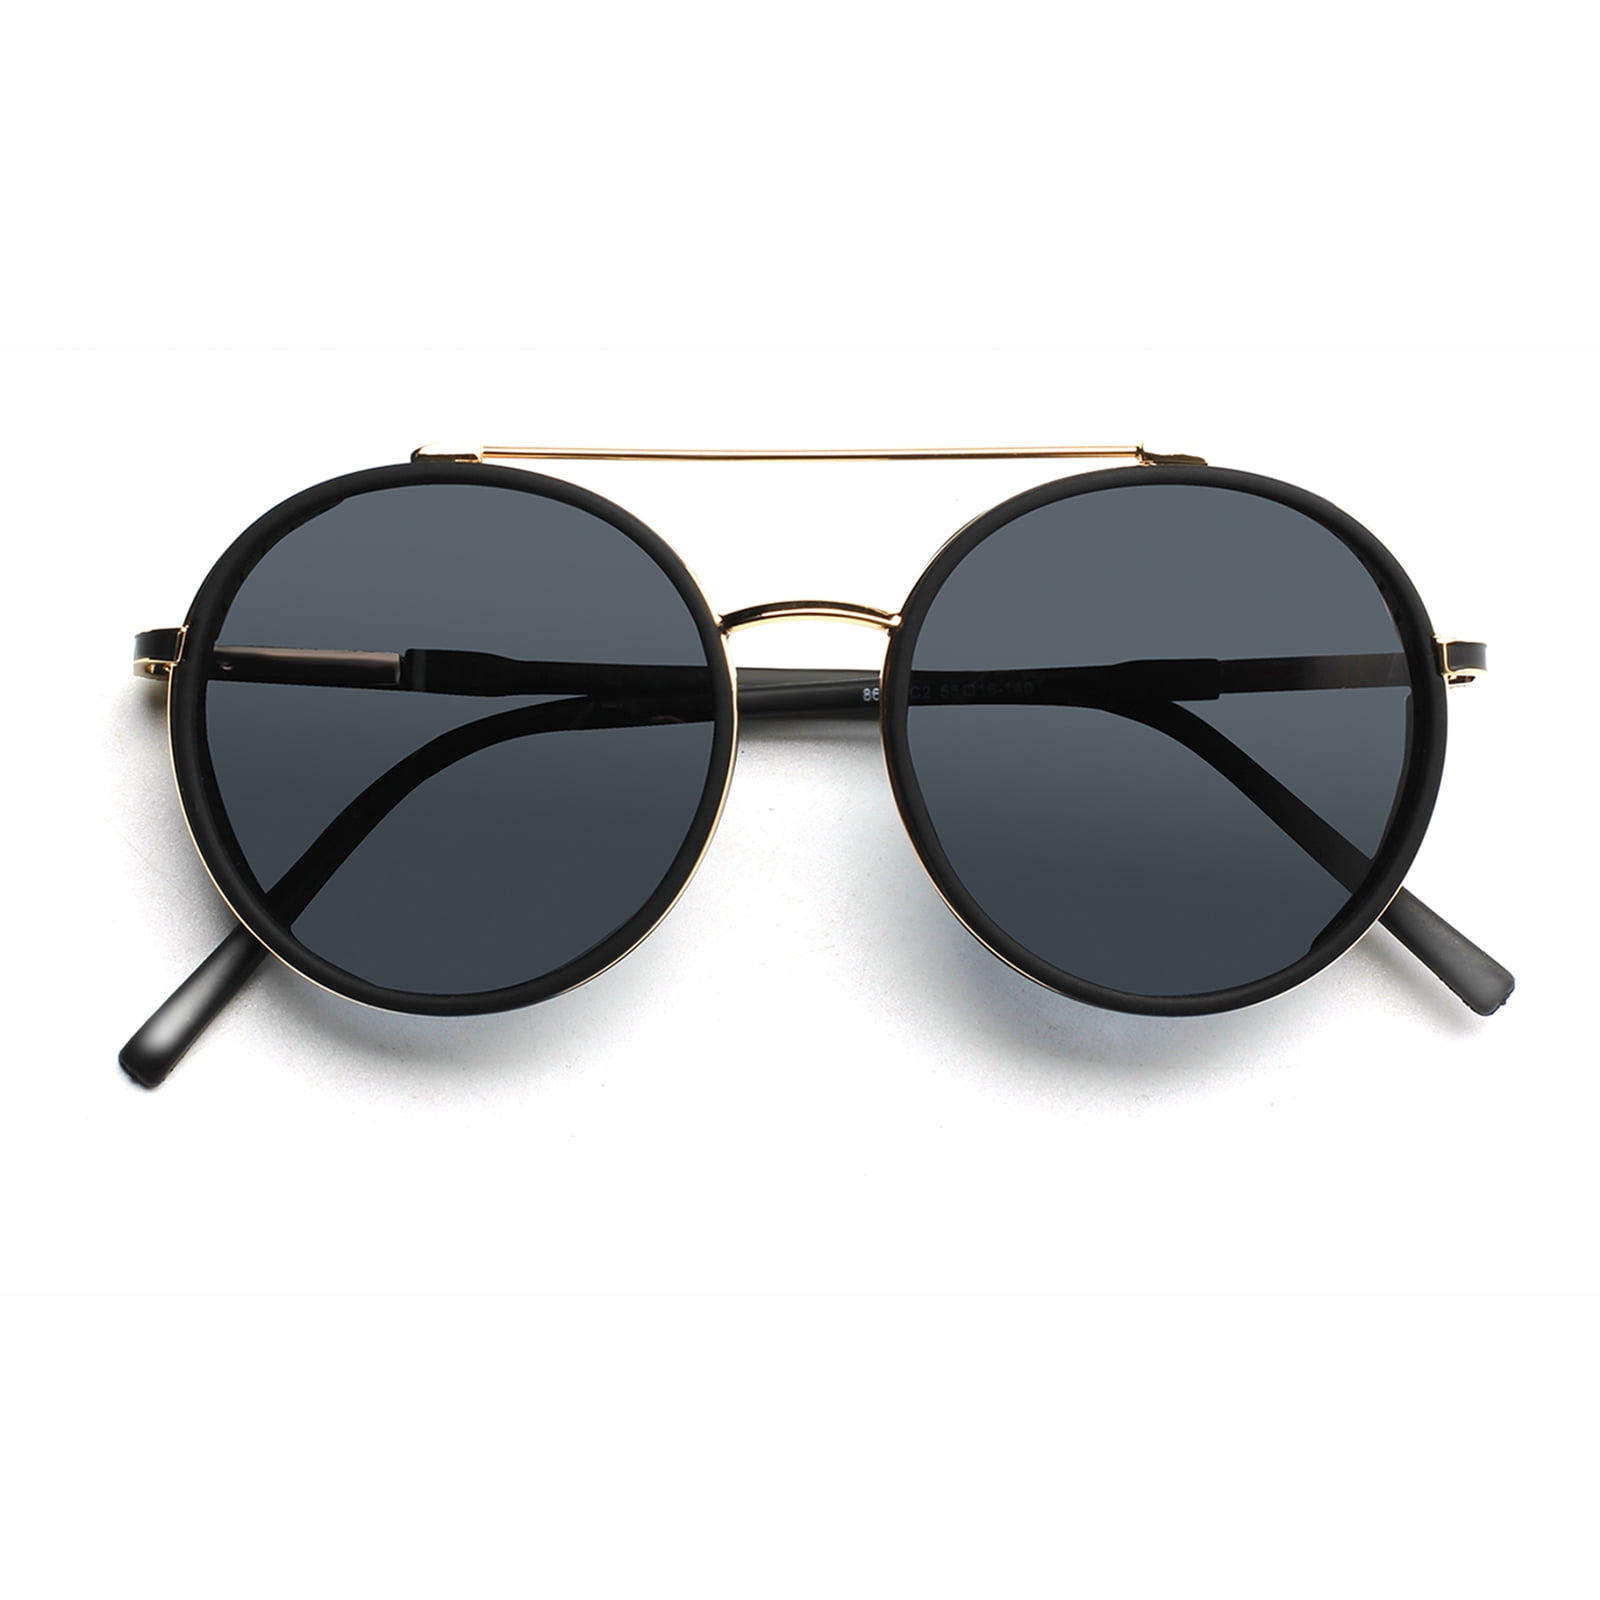 Cyxus Square Vintage TR Polarized Sunglasses for Women Men UV 420